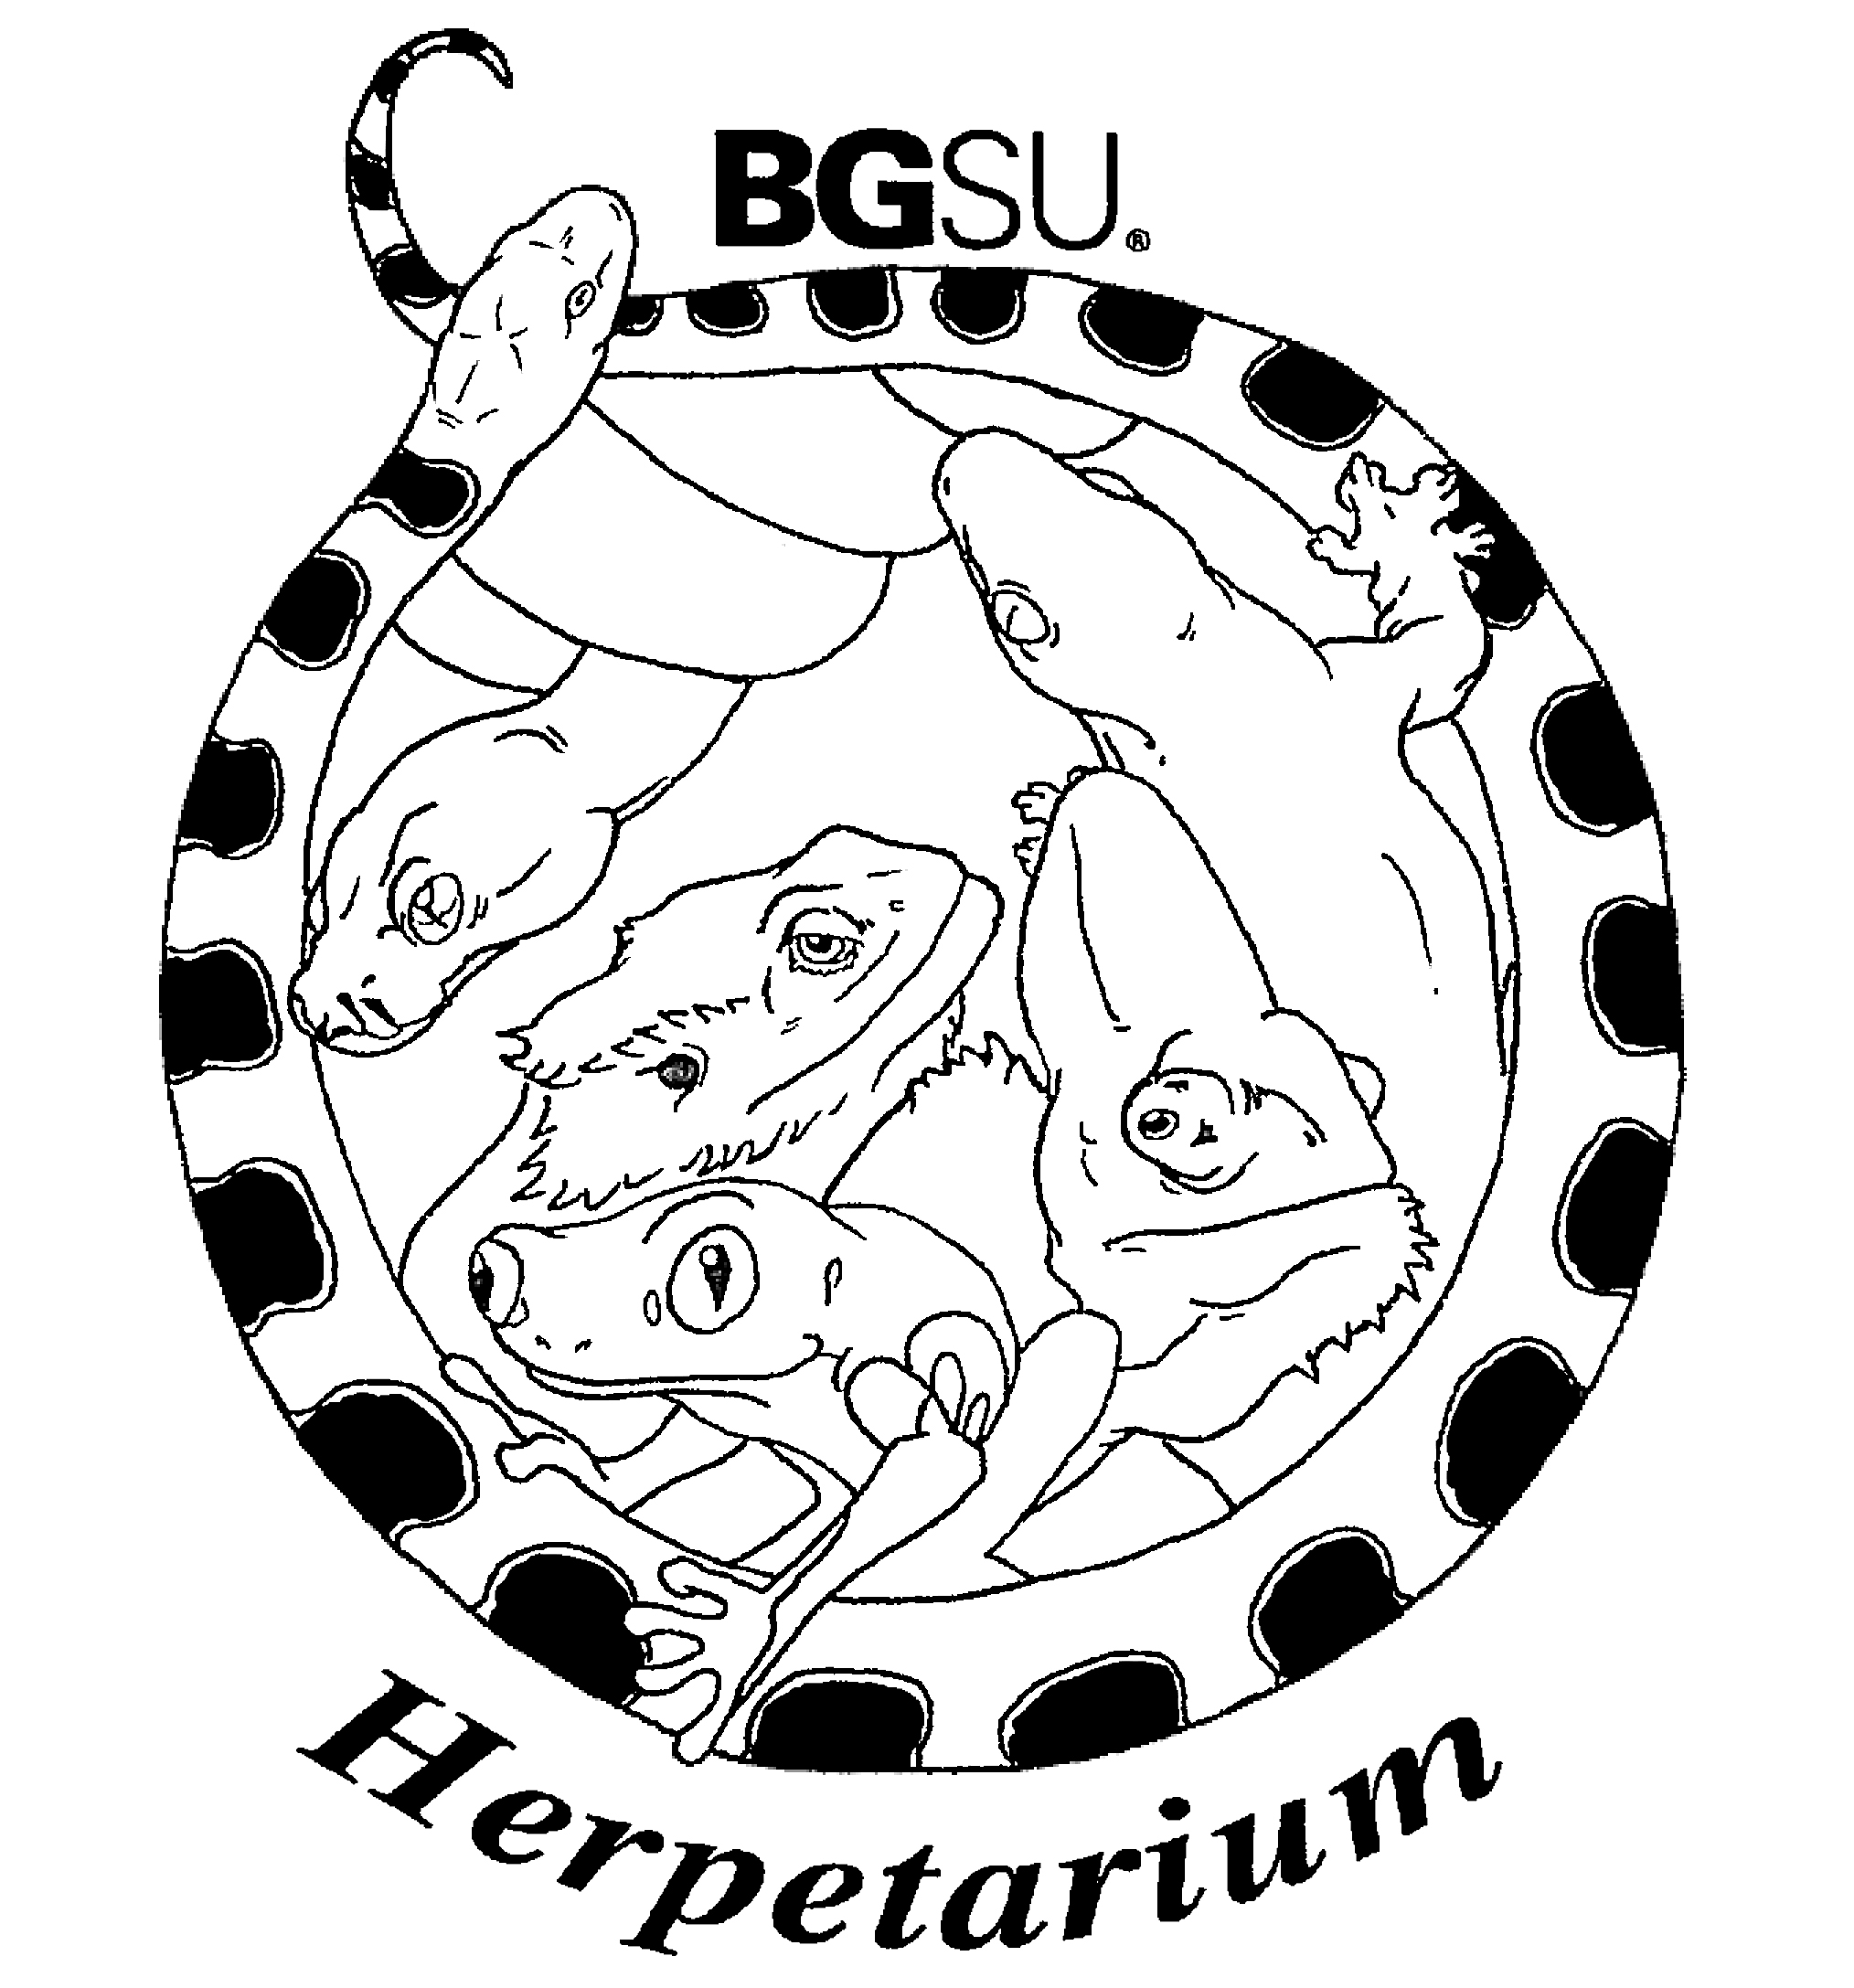 BGSU Herpetarium